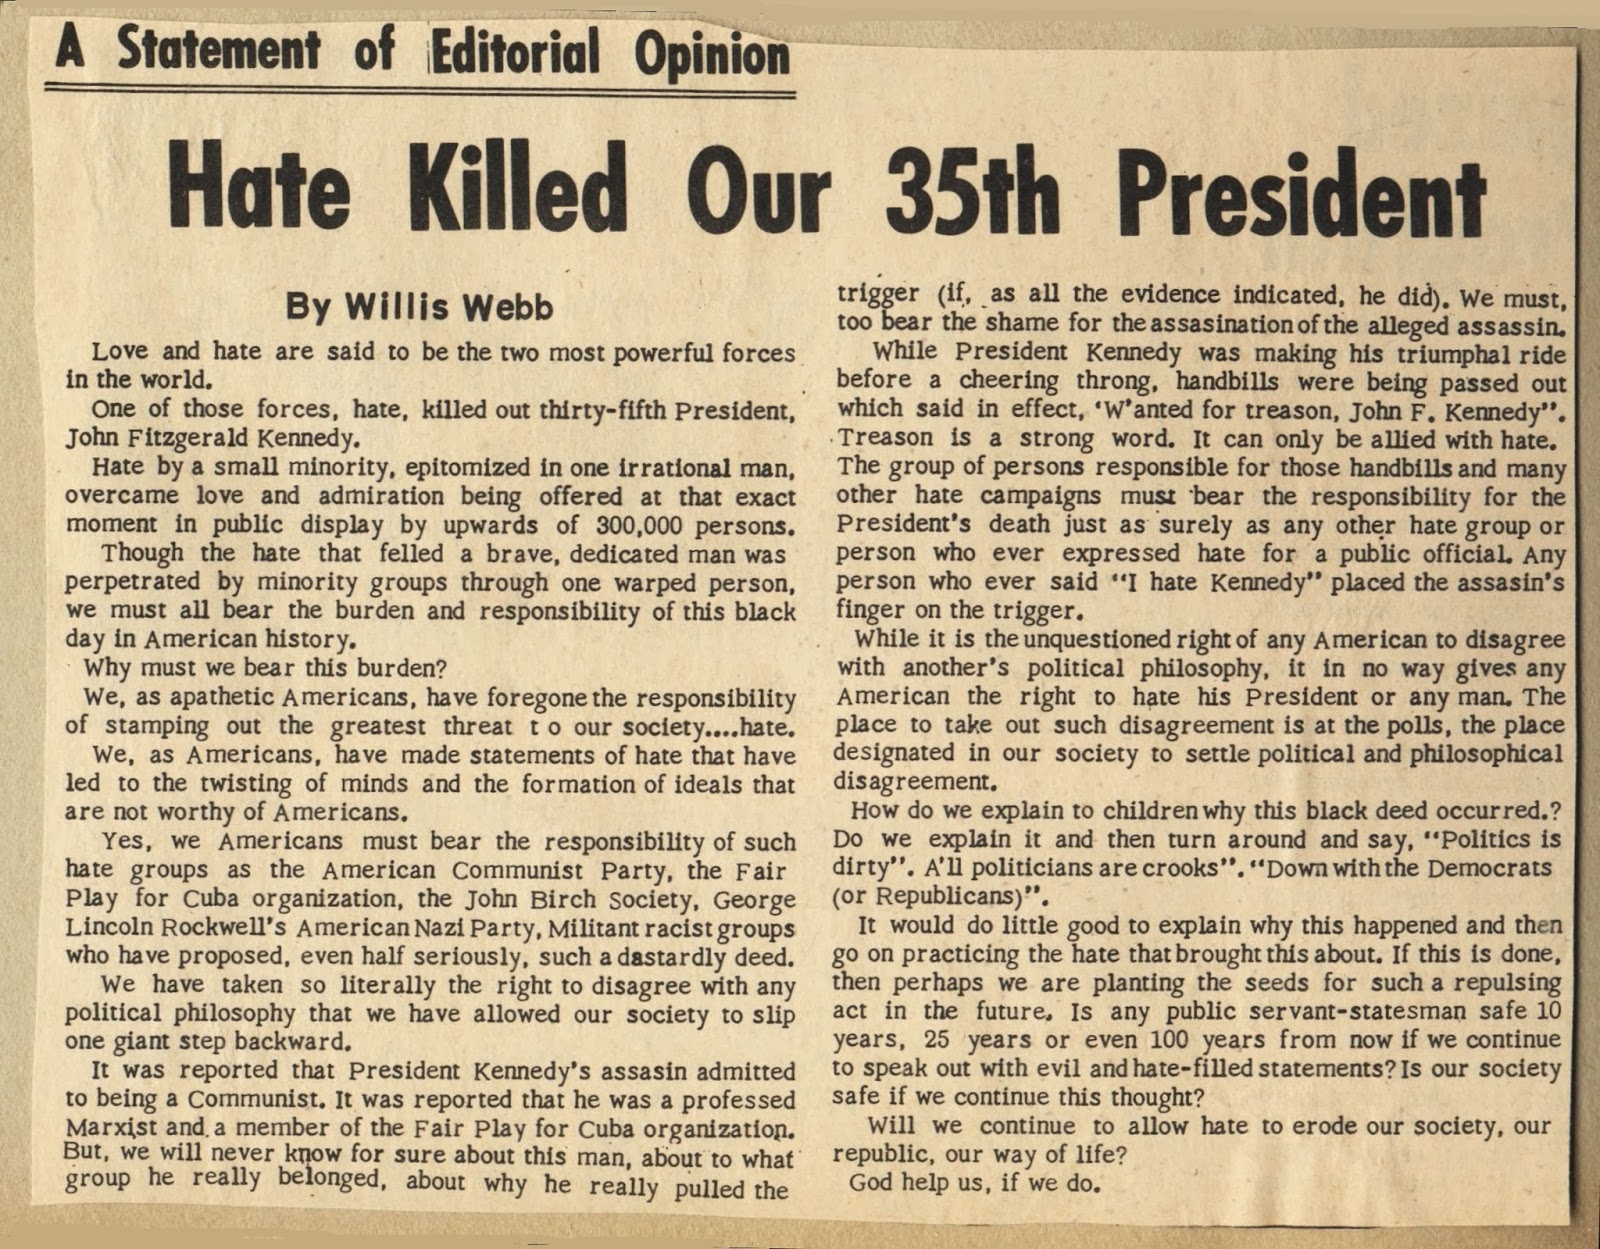 Original jfk assassination conspiracy theories 1963 | new 